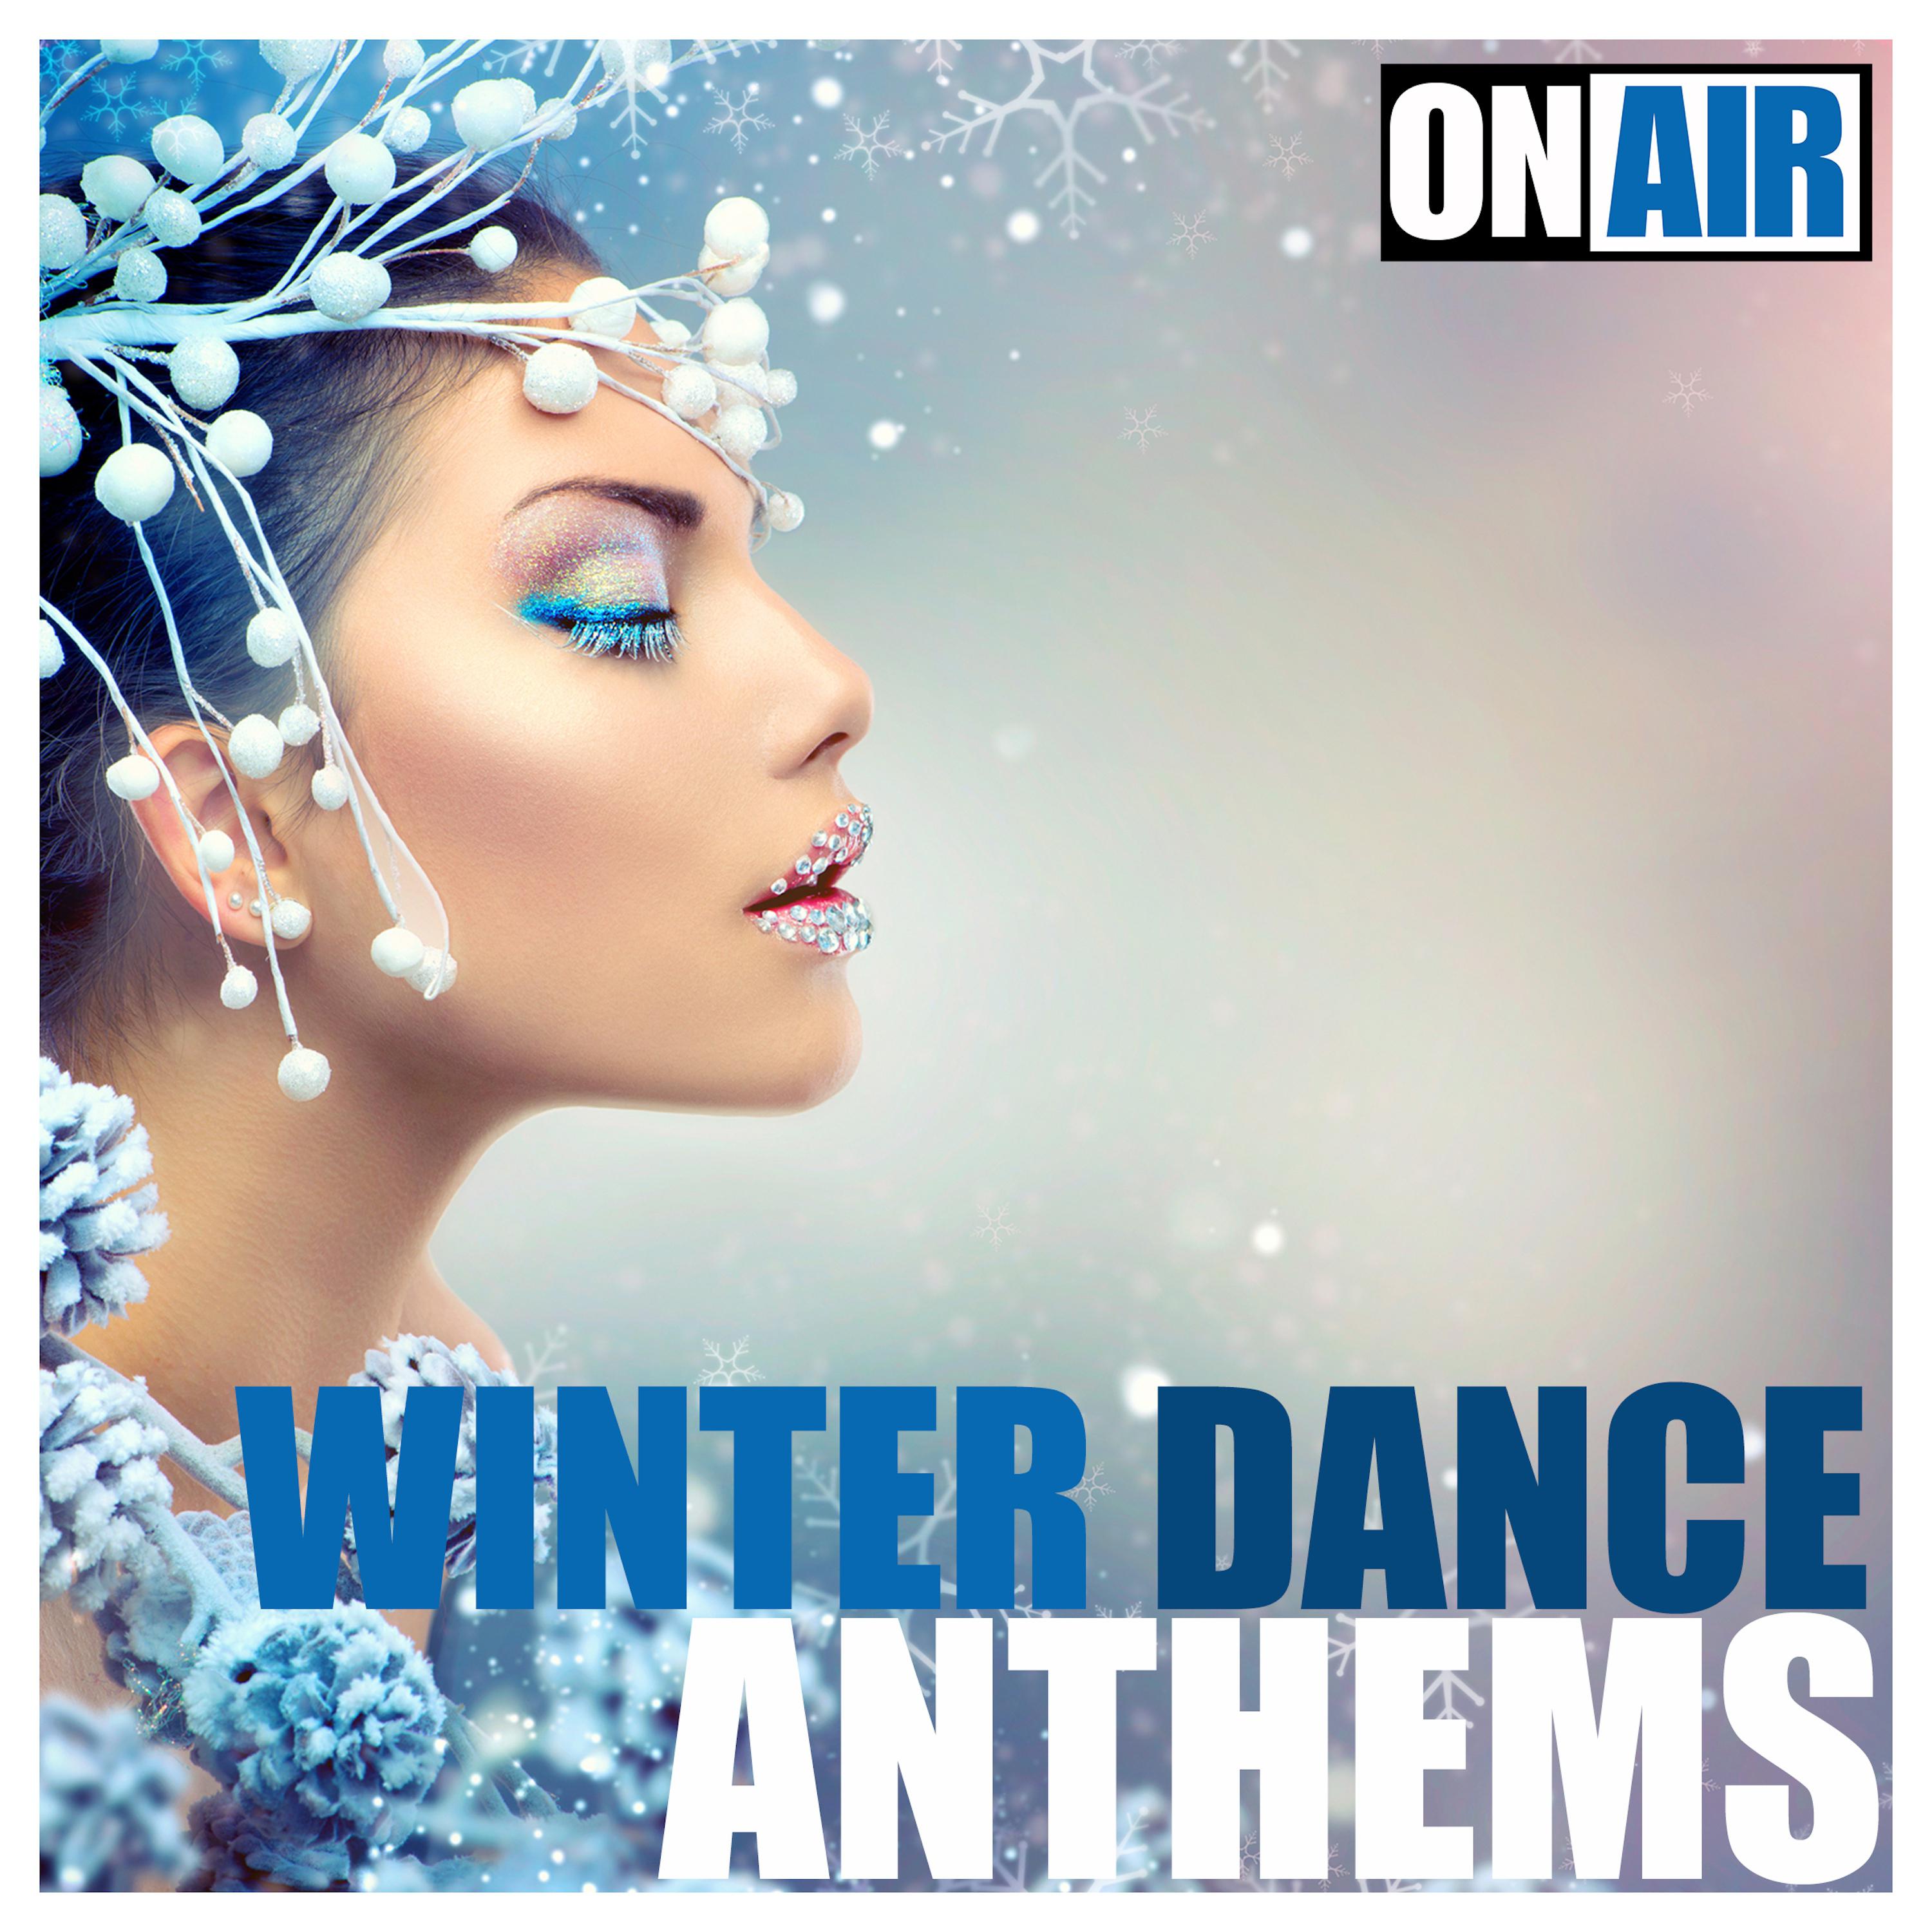 On Air Winter Dance Anthems